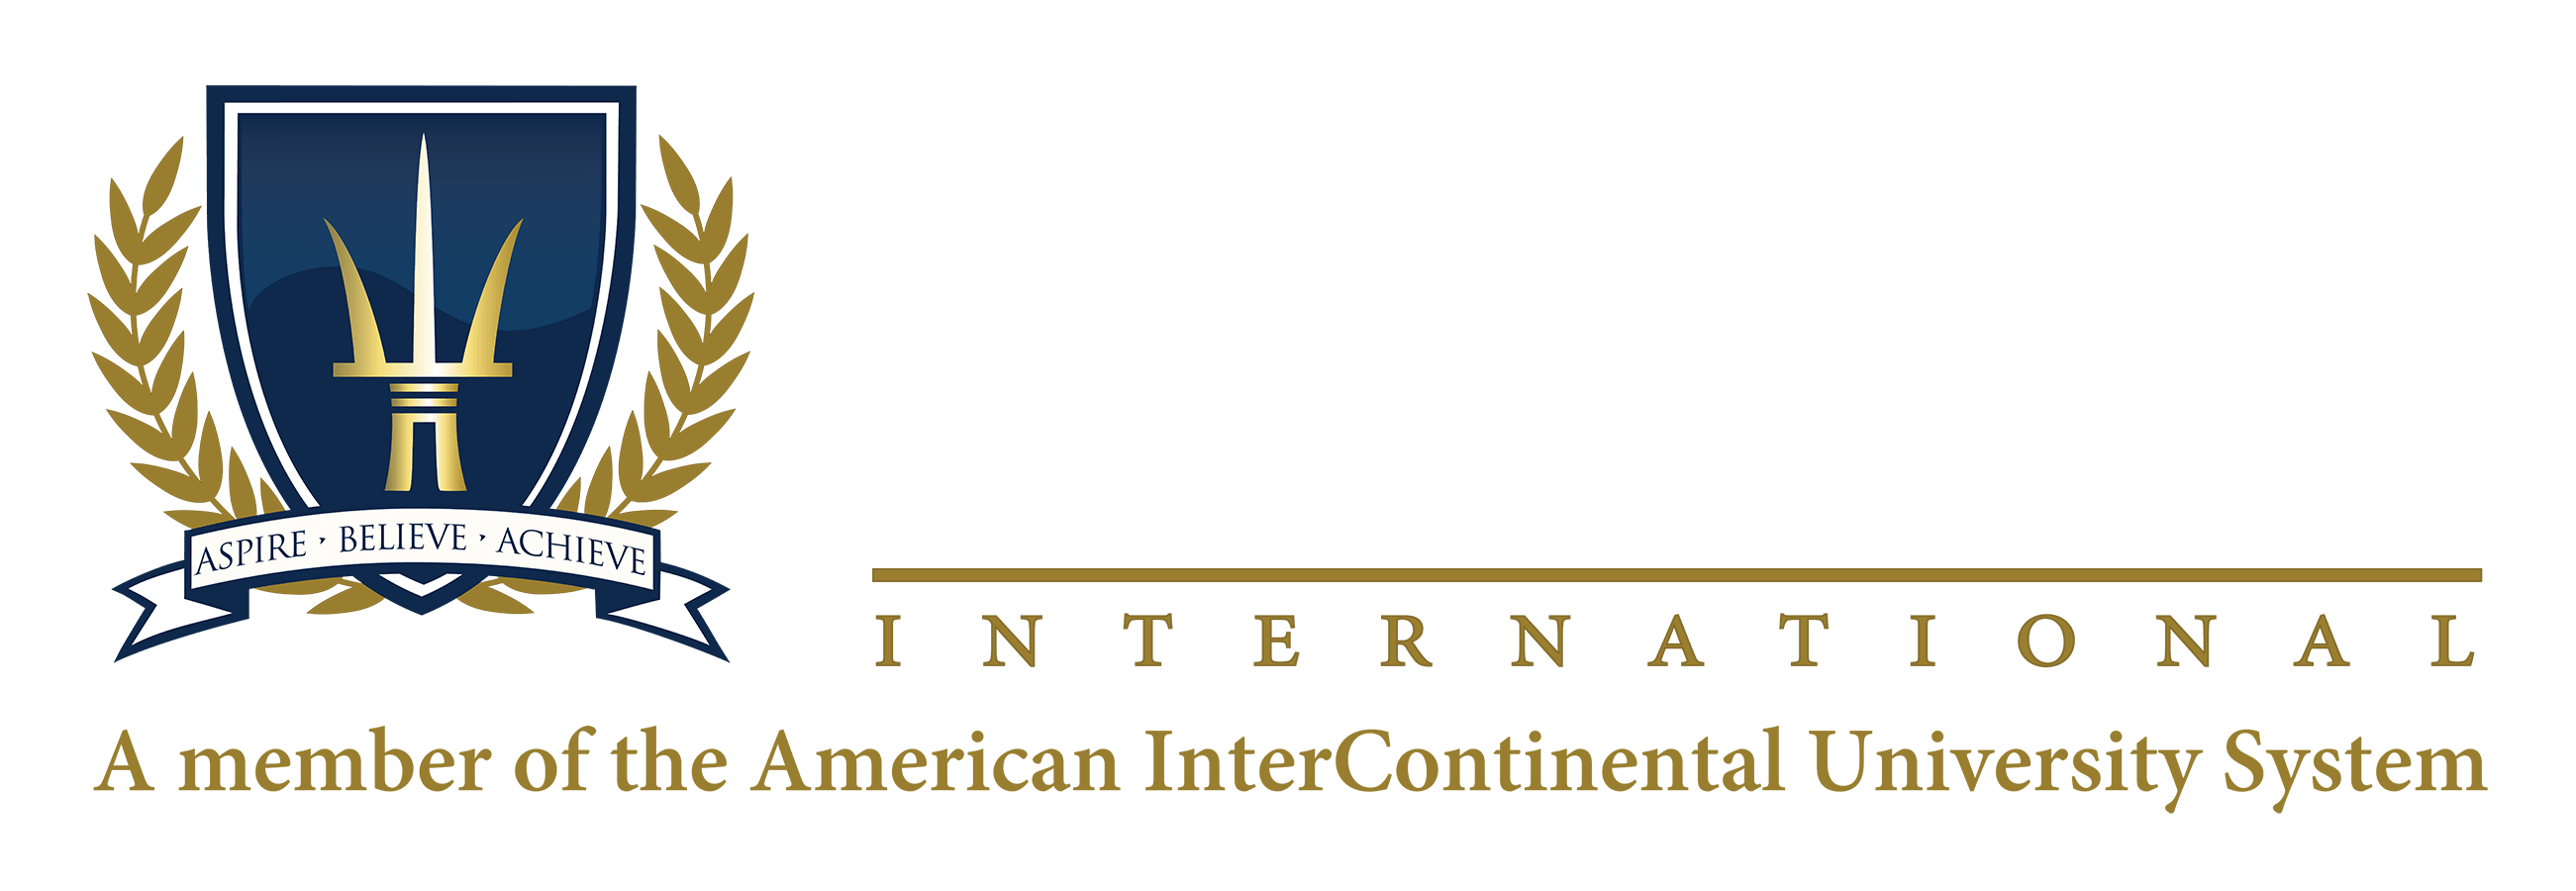 Trident University Logo for a Level Marketing Case Study